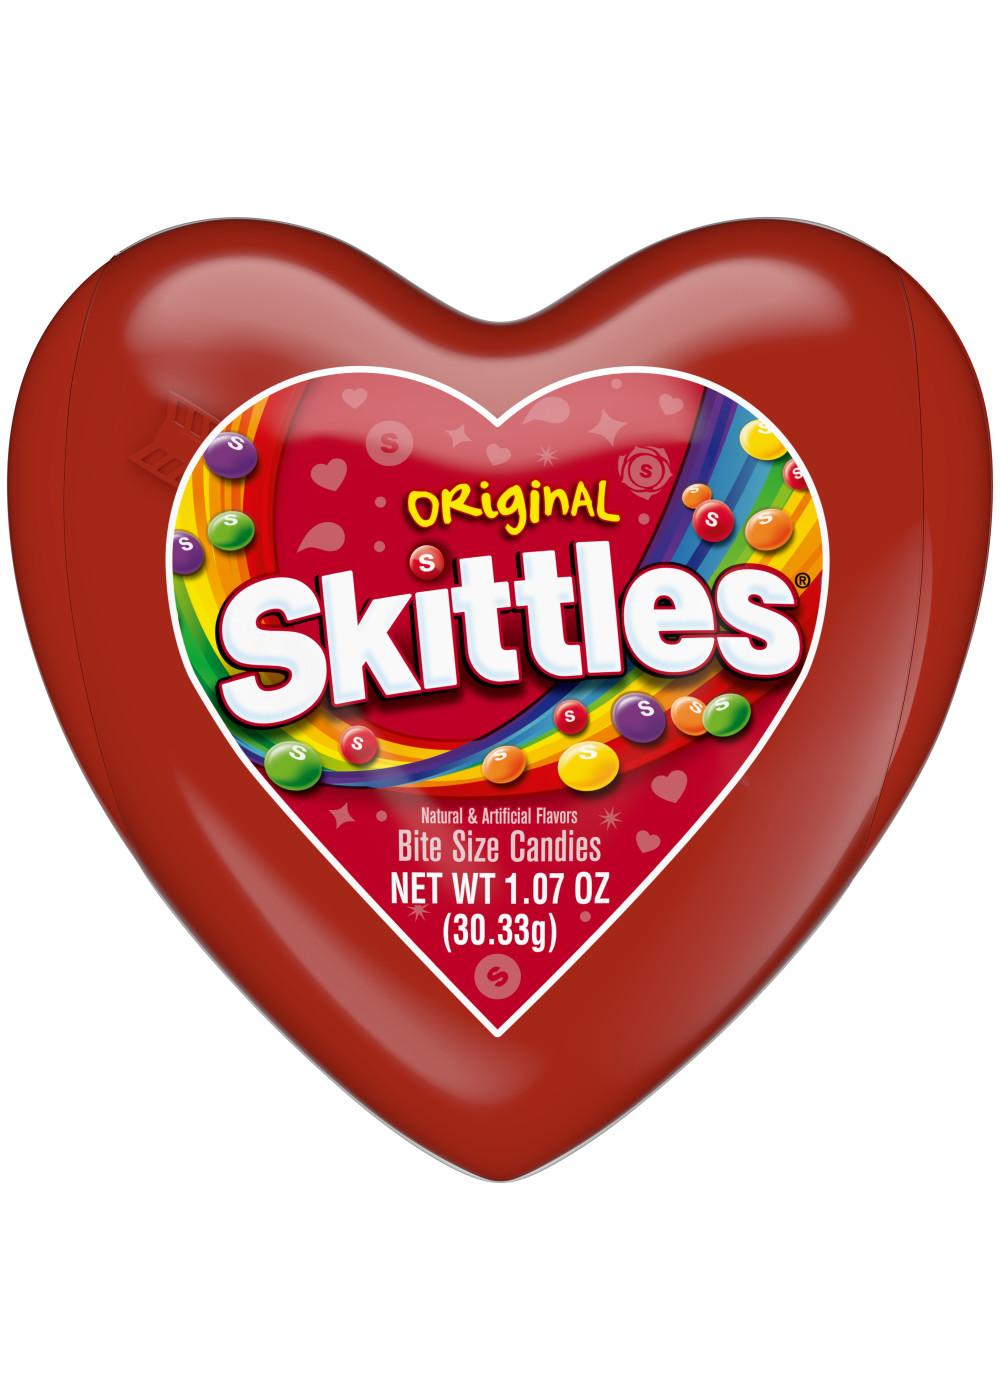 Skittles Original Candy Valentine's Heart Gift Box; image 1 of 7